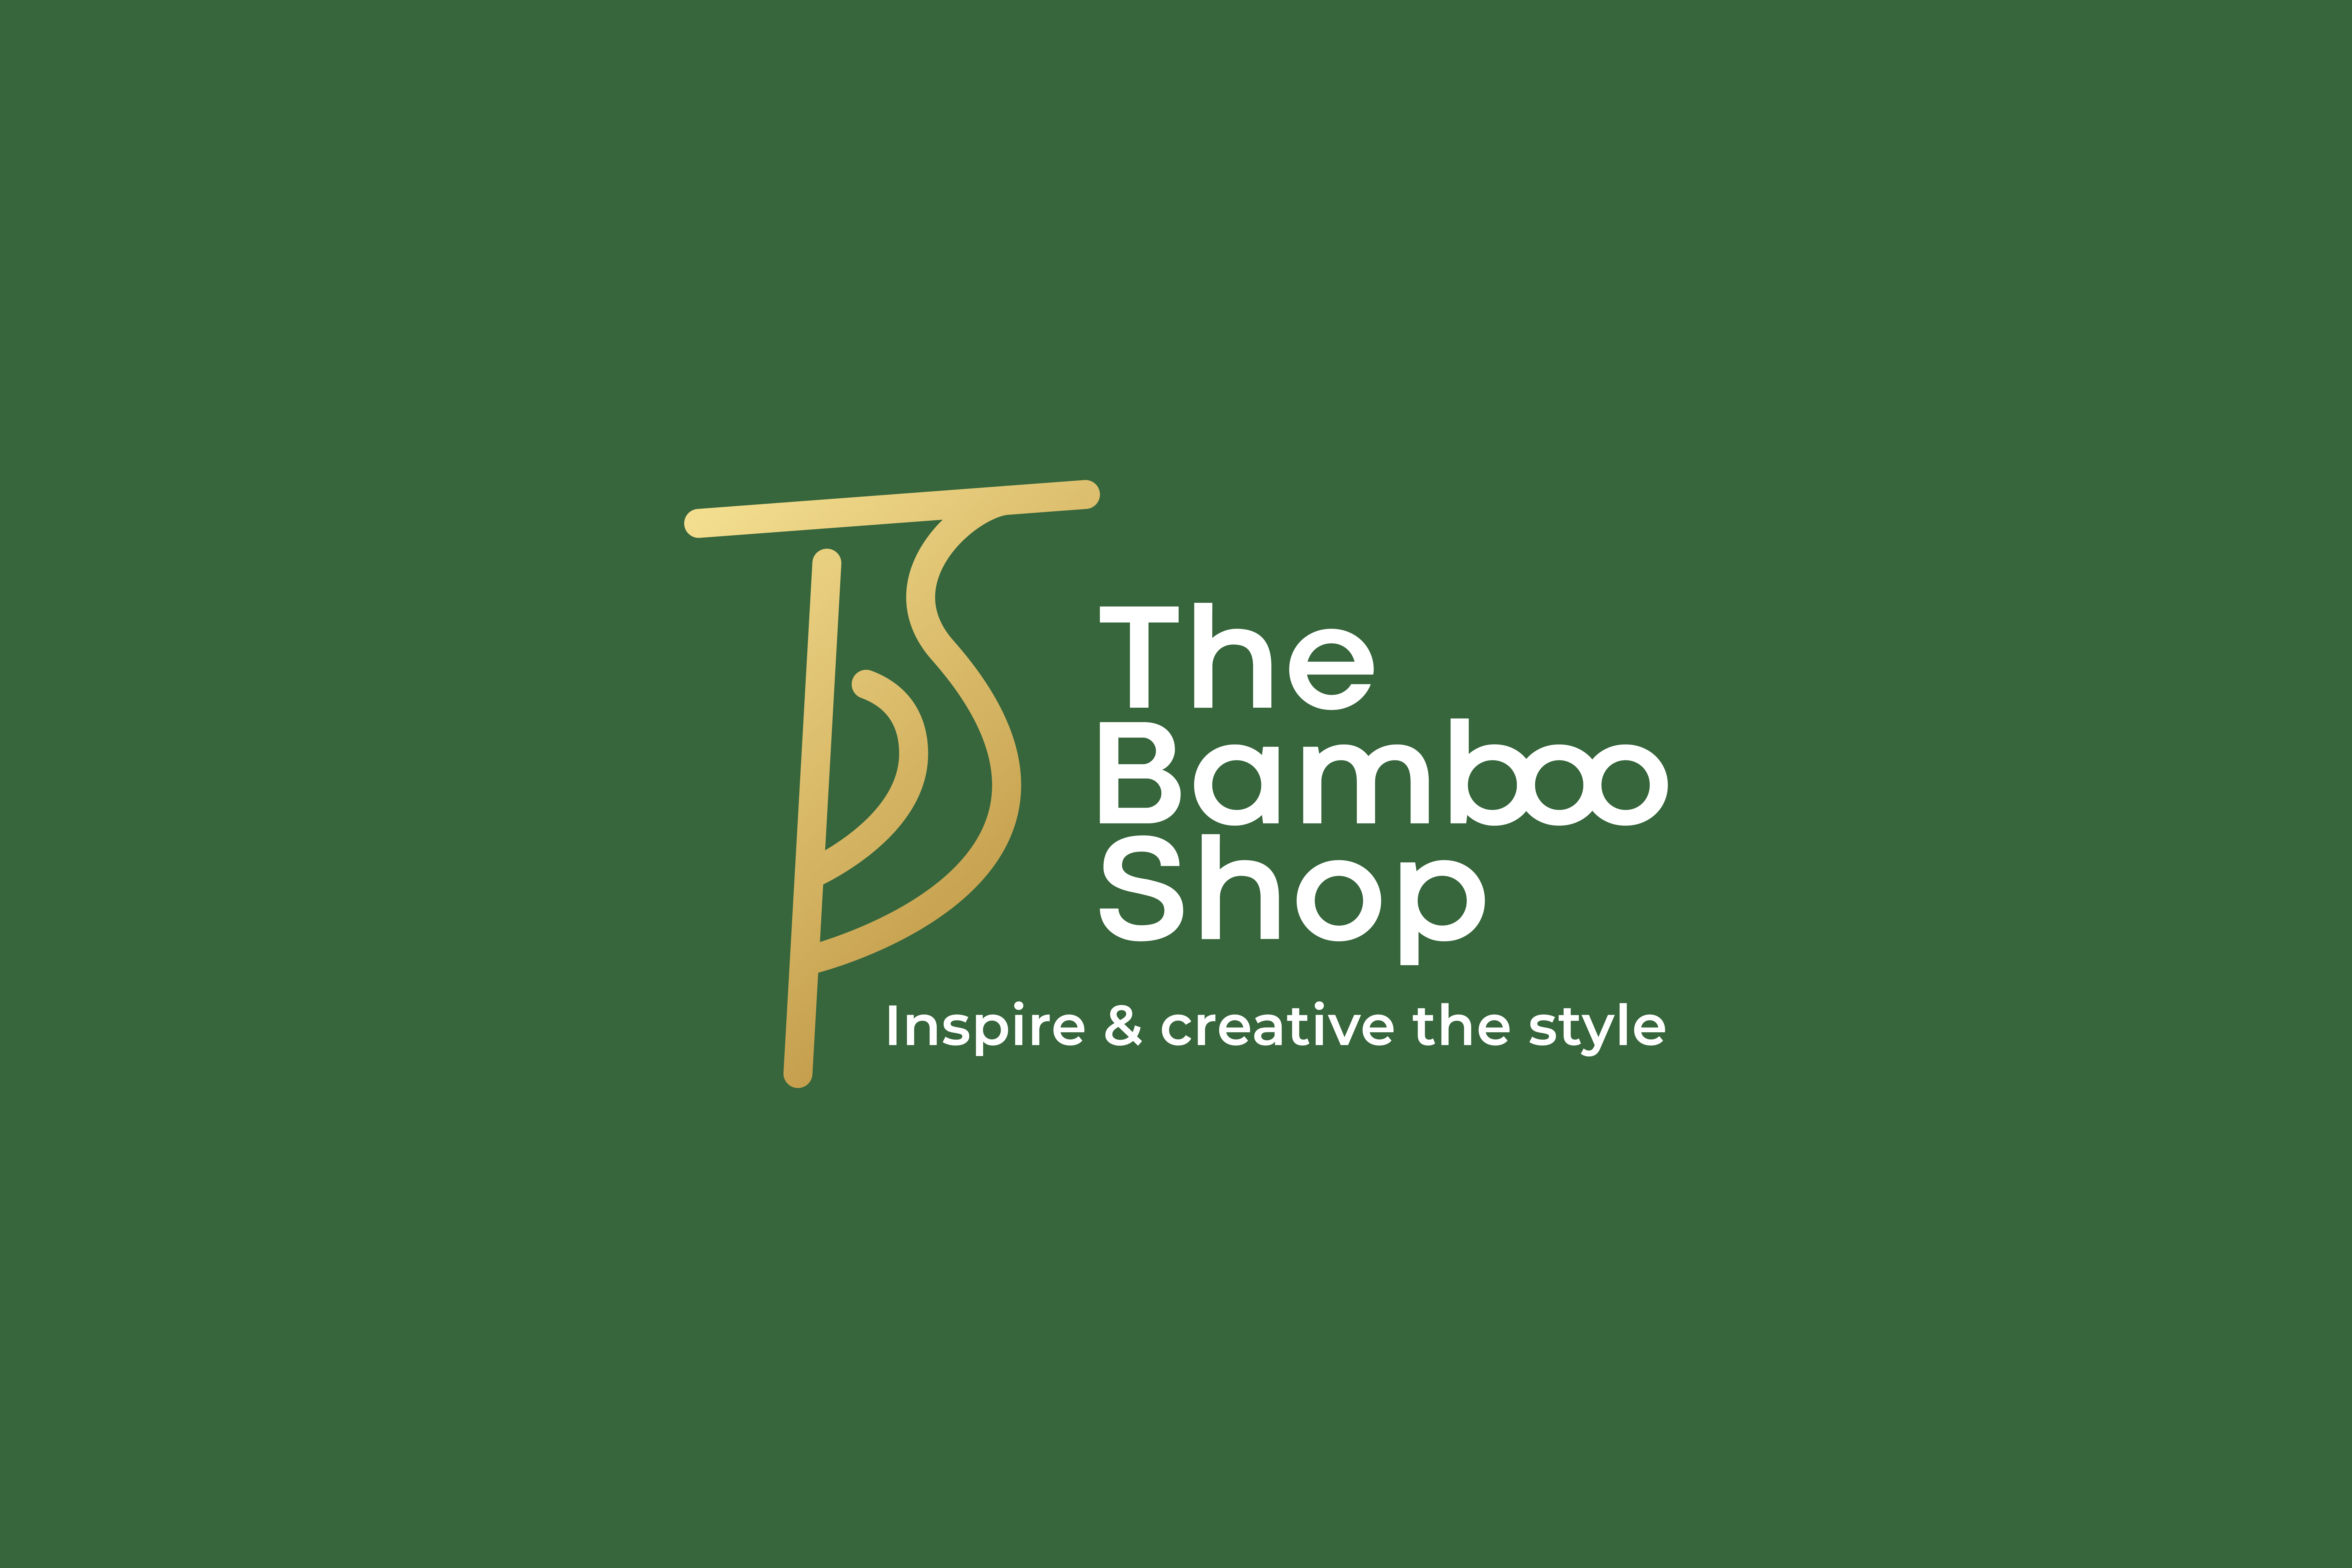 THIẾT KẾ LOGO THỜI TRANG THE BAMBOO SHOP